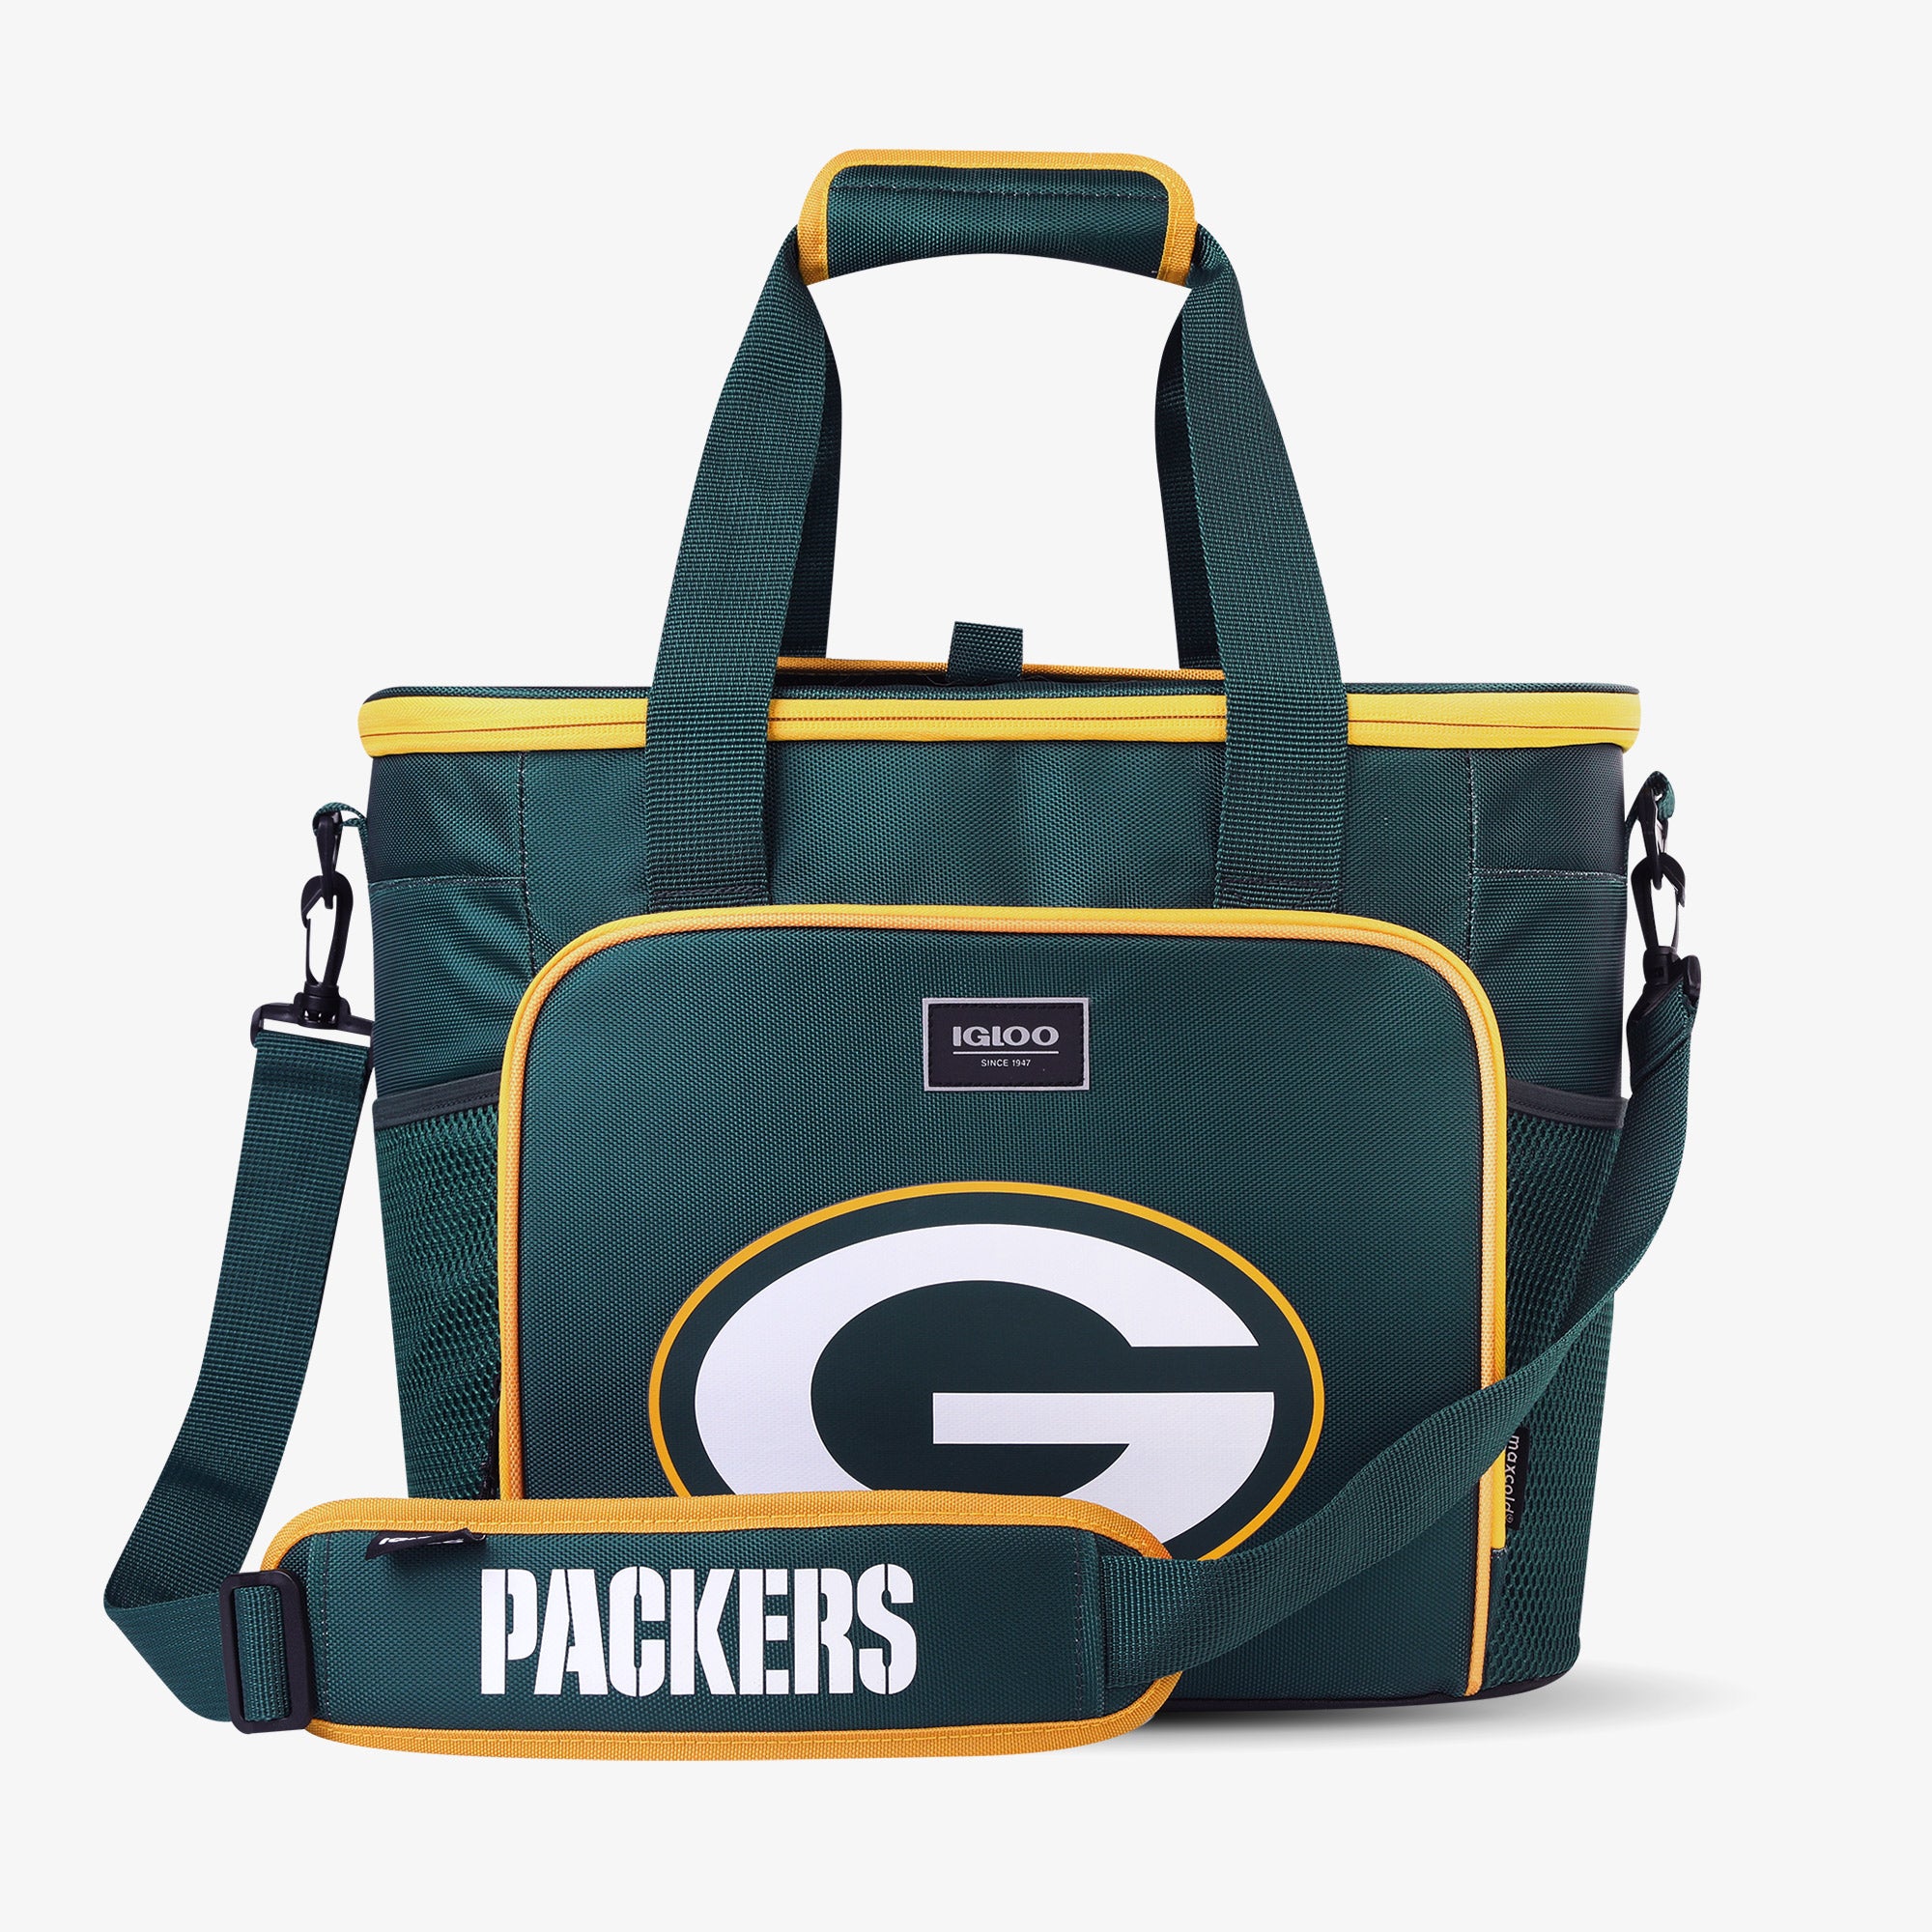 Buy NFL Green Bay Packers Drawstring Backpack at Ubuy India